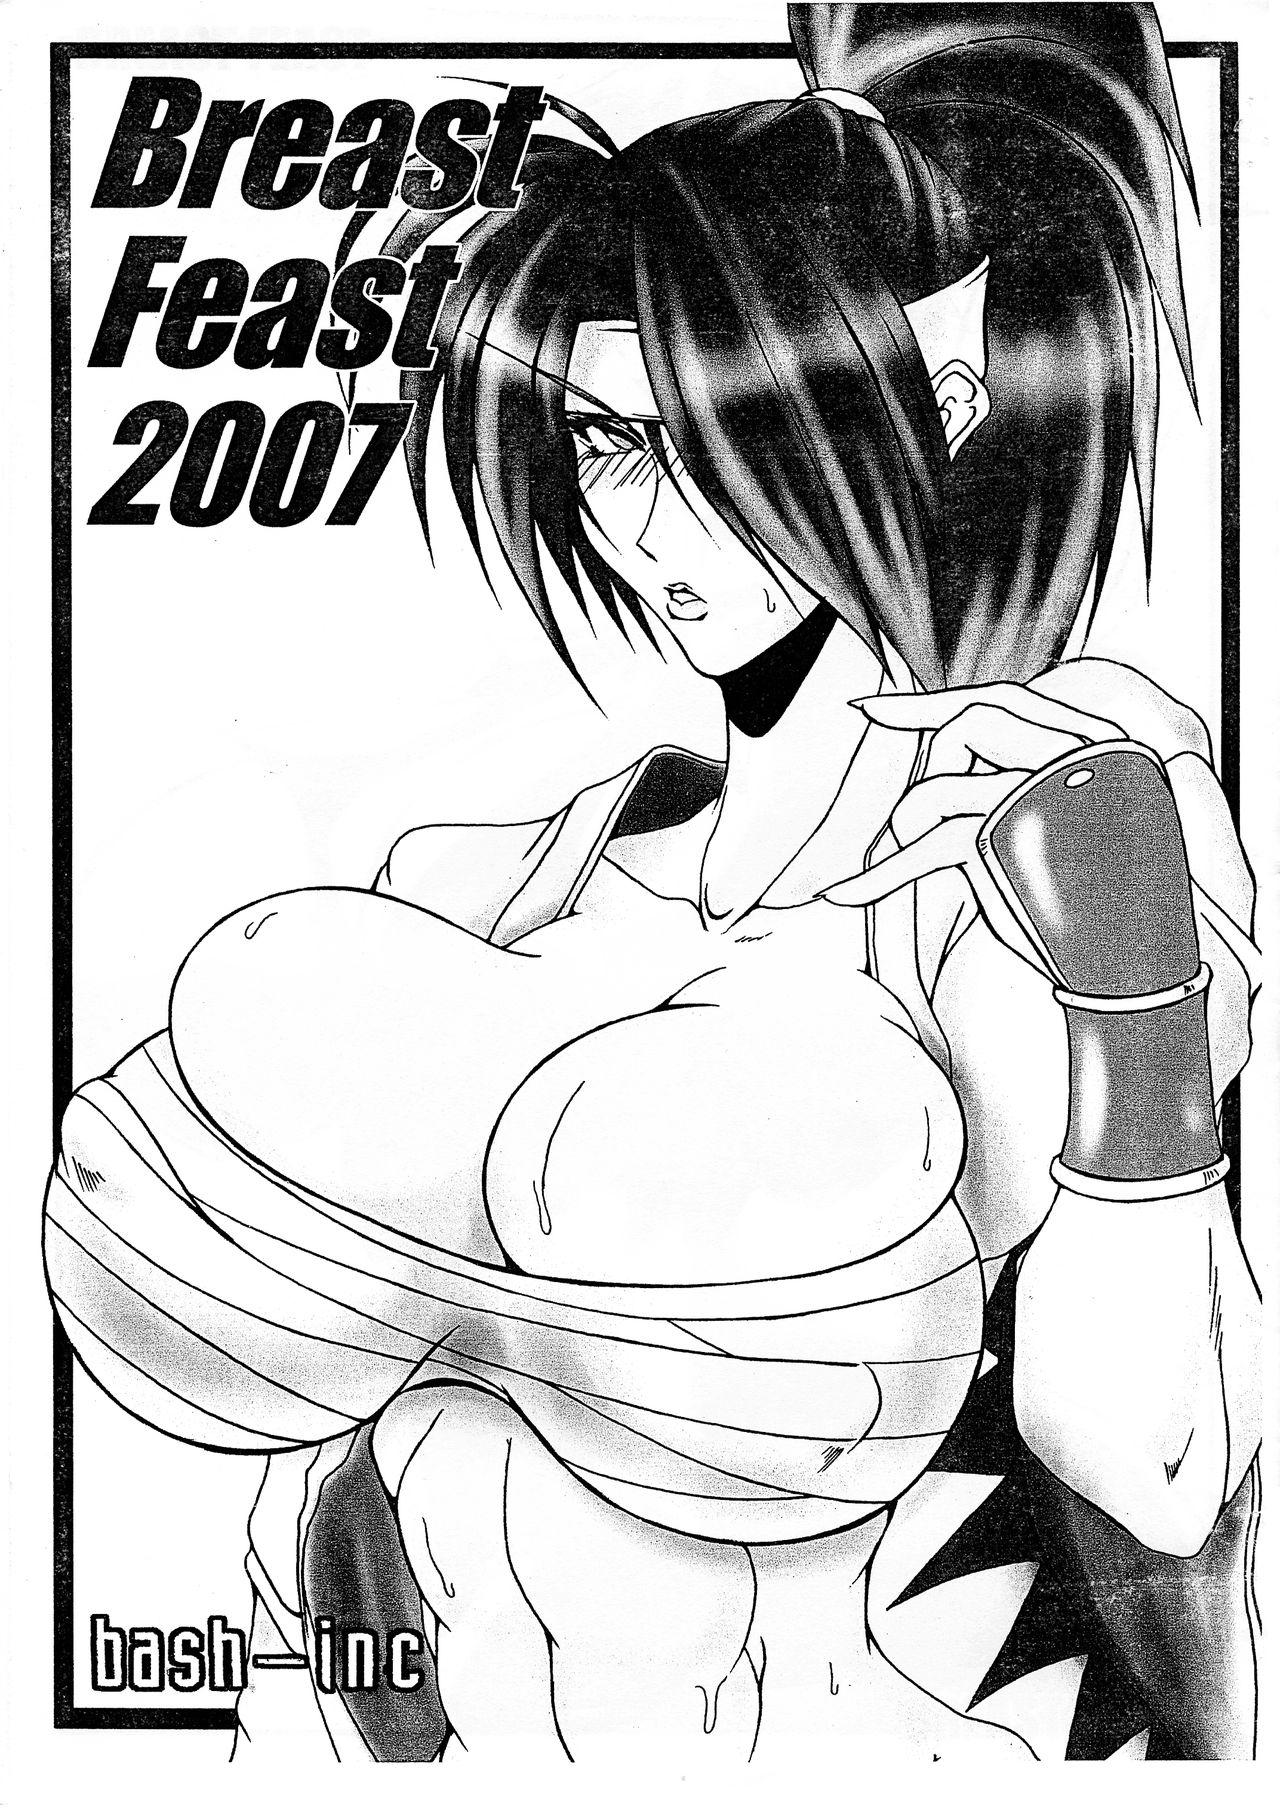 Breast Feast 2007 0